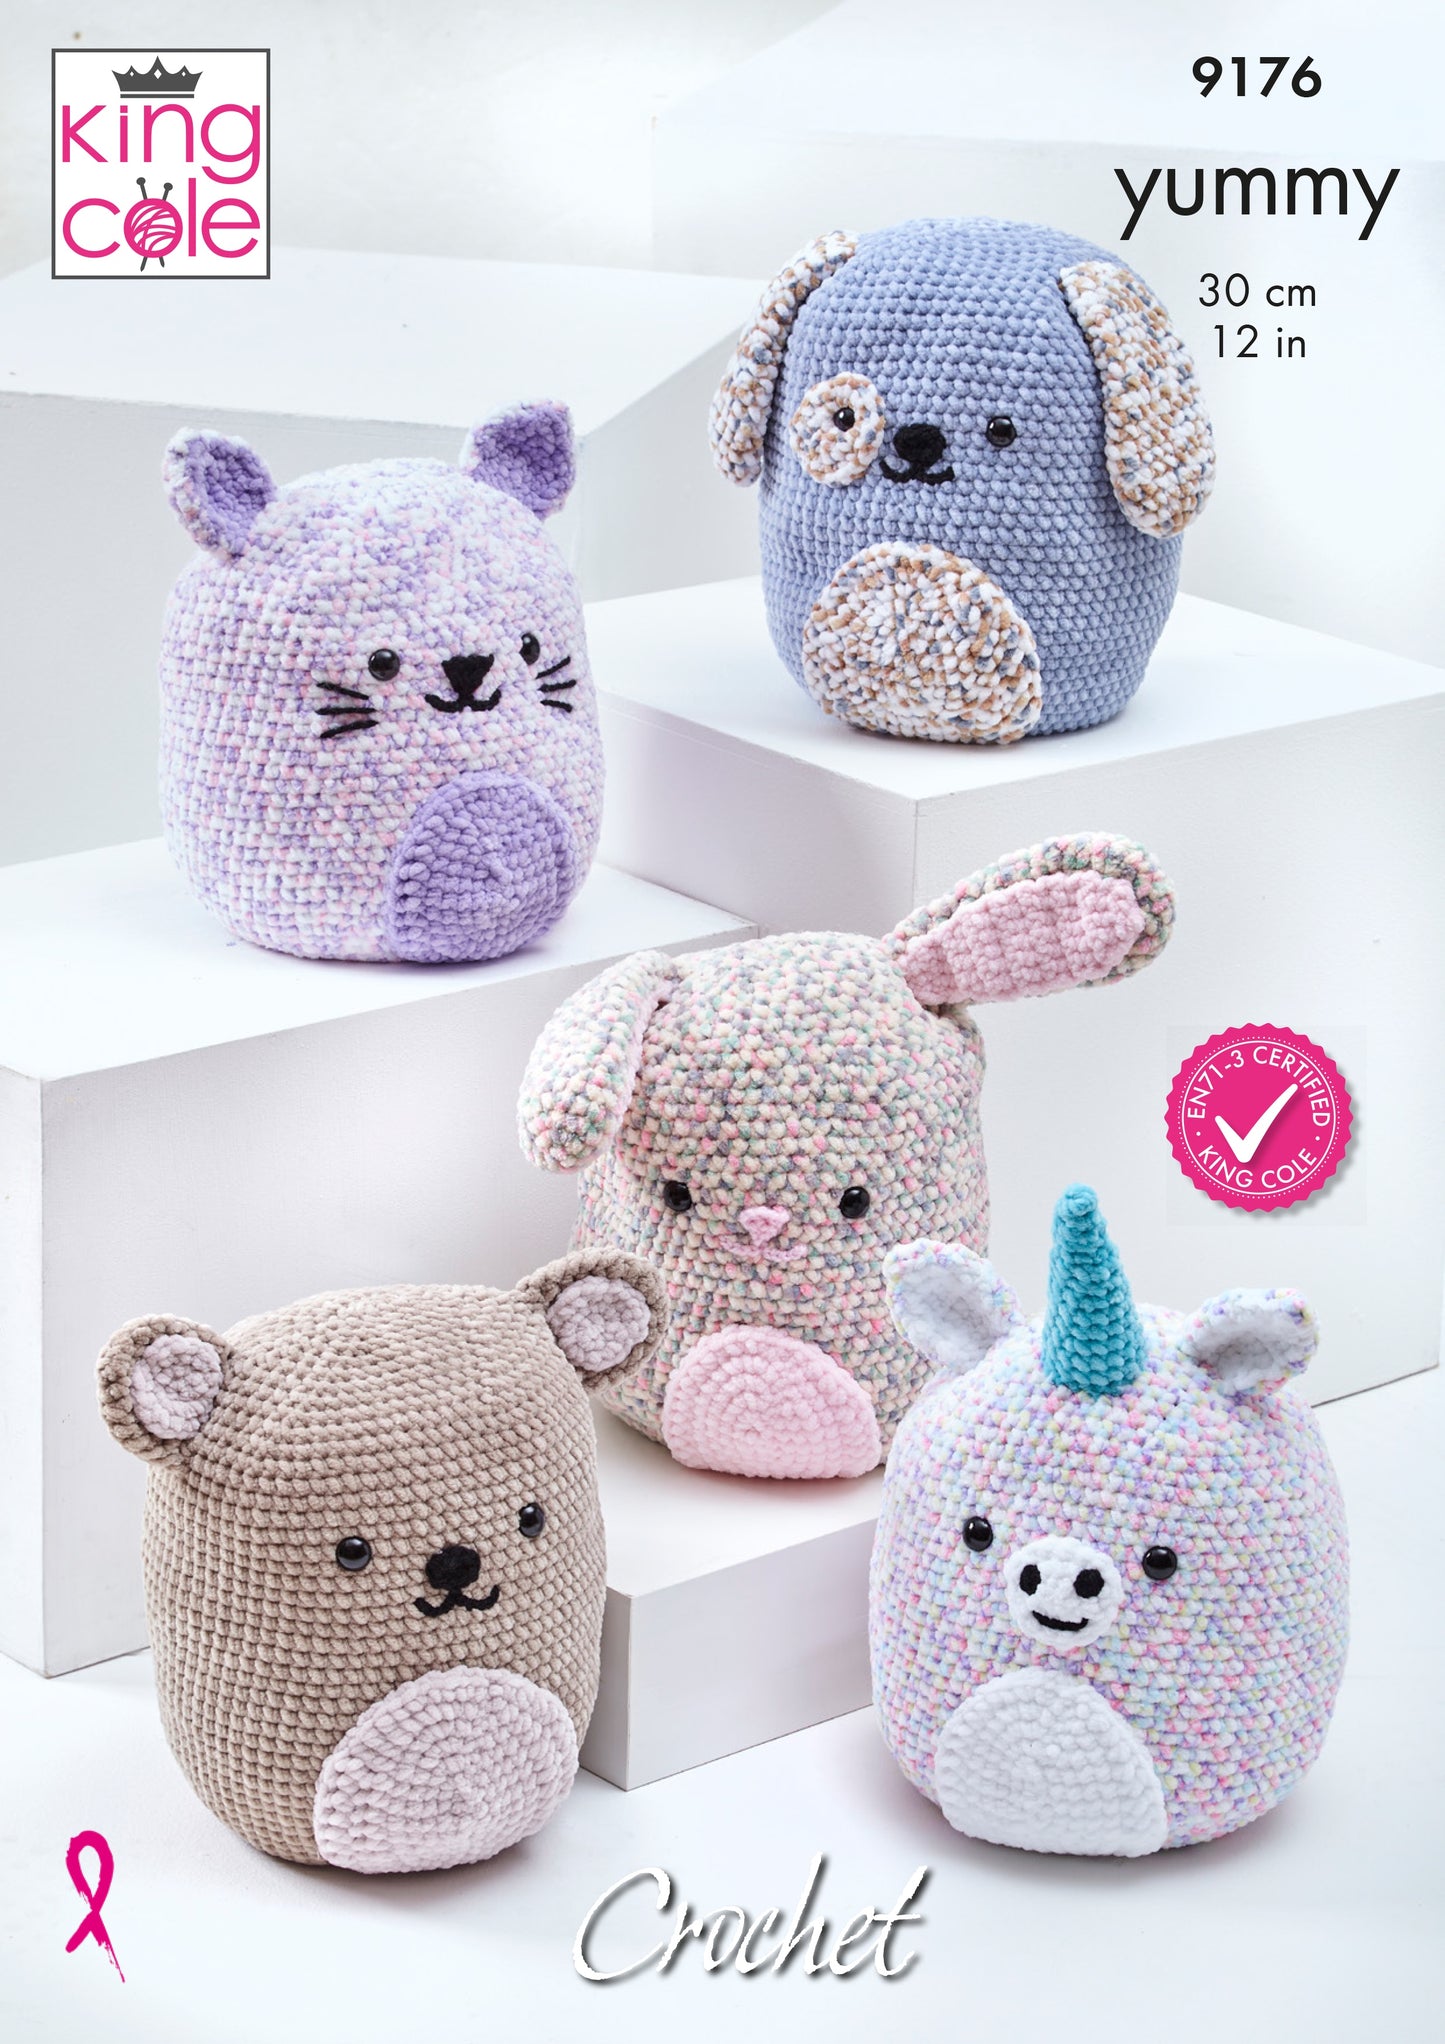 Knitting Pattern 9176 - Squishy Amigurumi Toys Crocheted in Yummy & Big Value Chunky